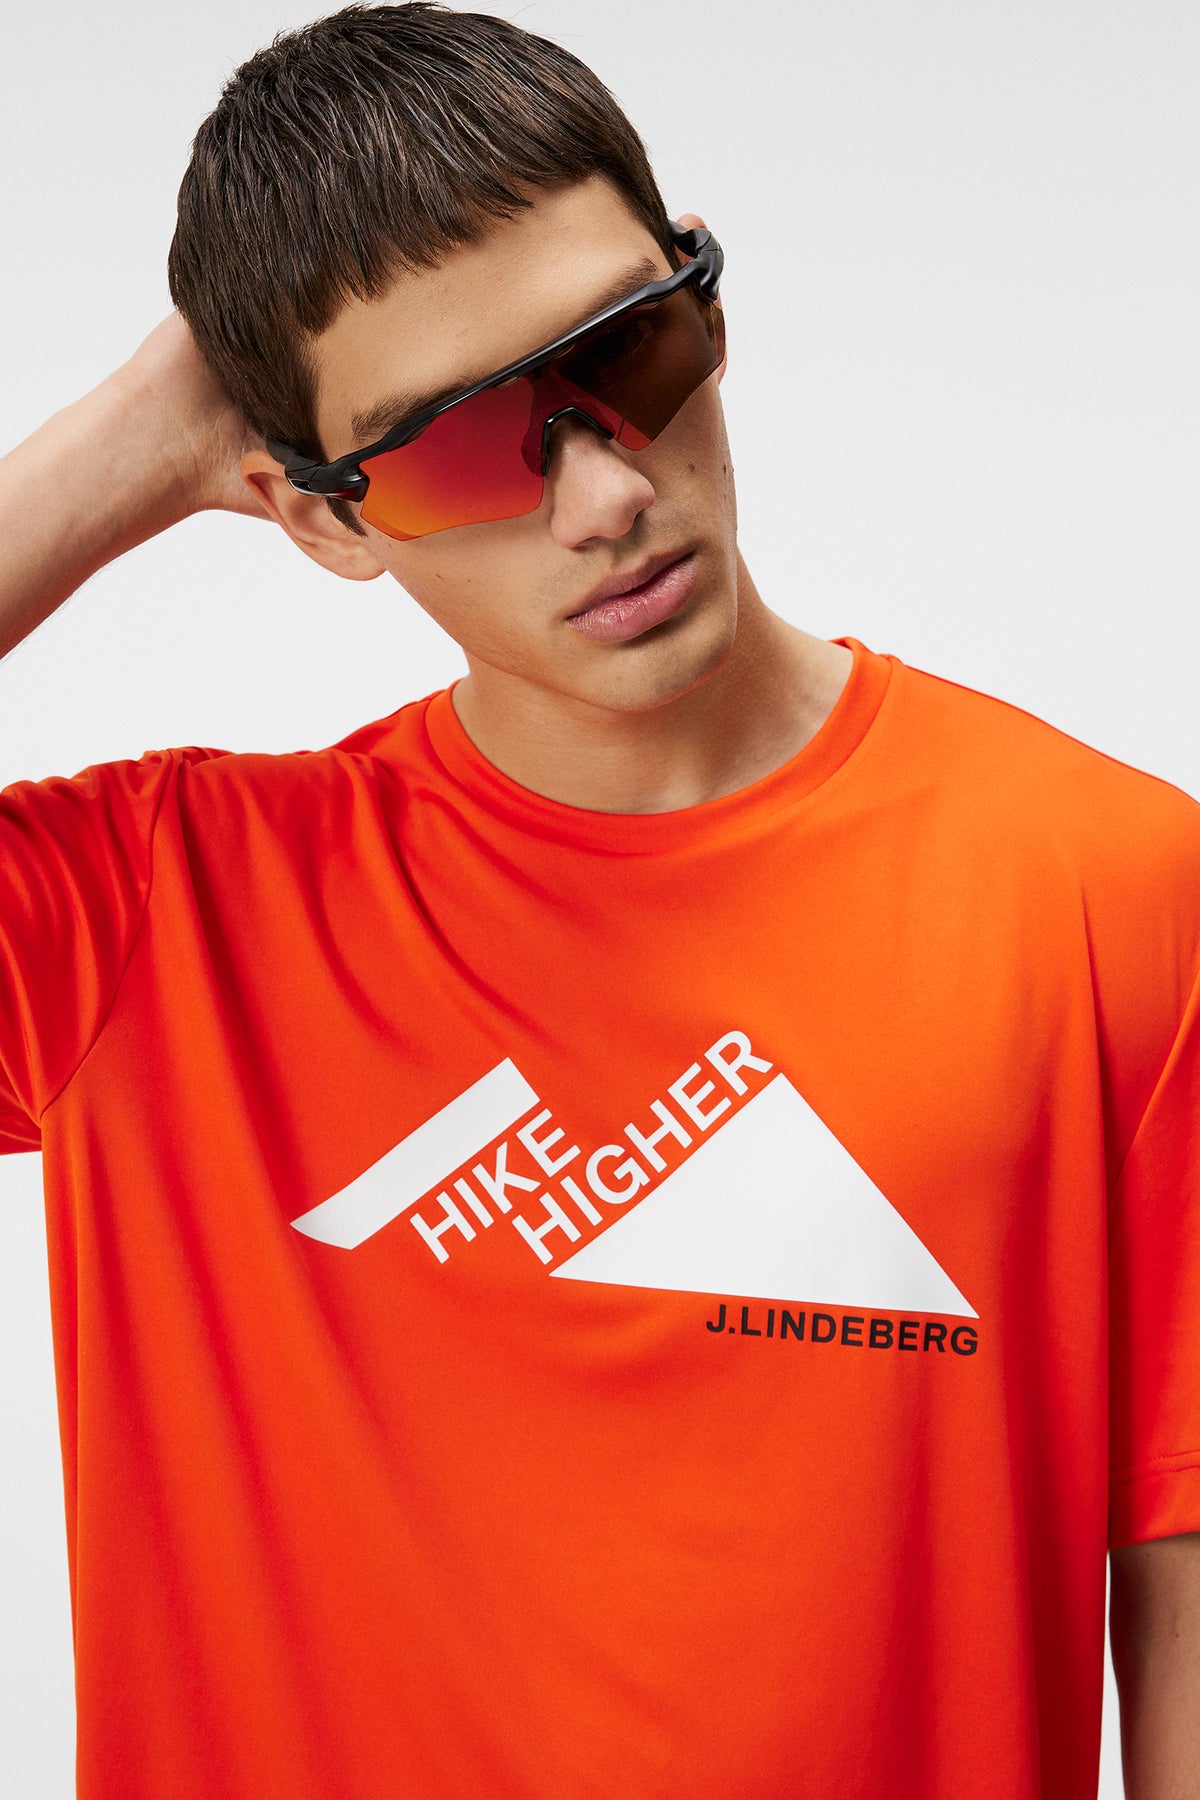 Andreas T-shirt / Tangerine Tango